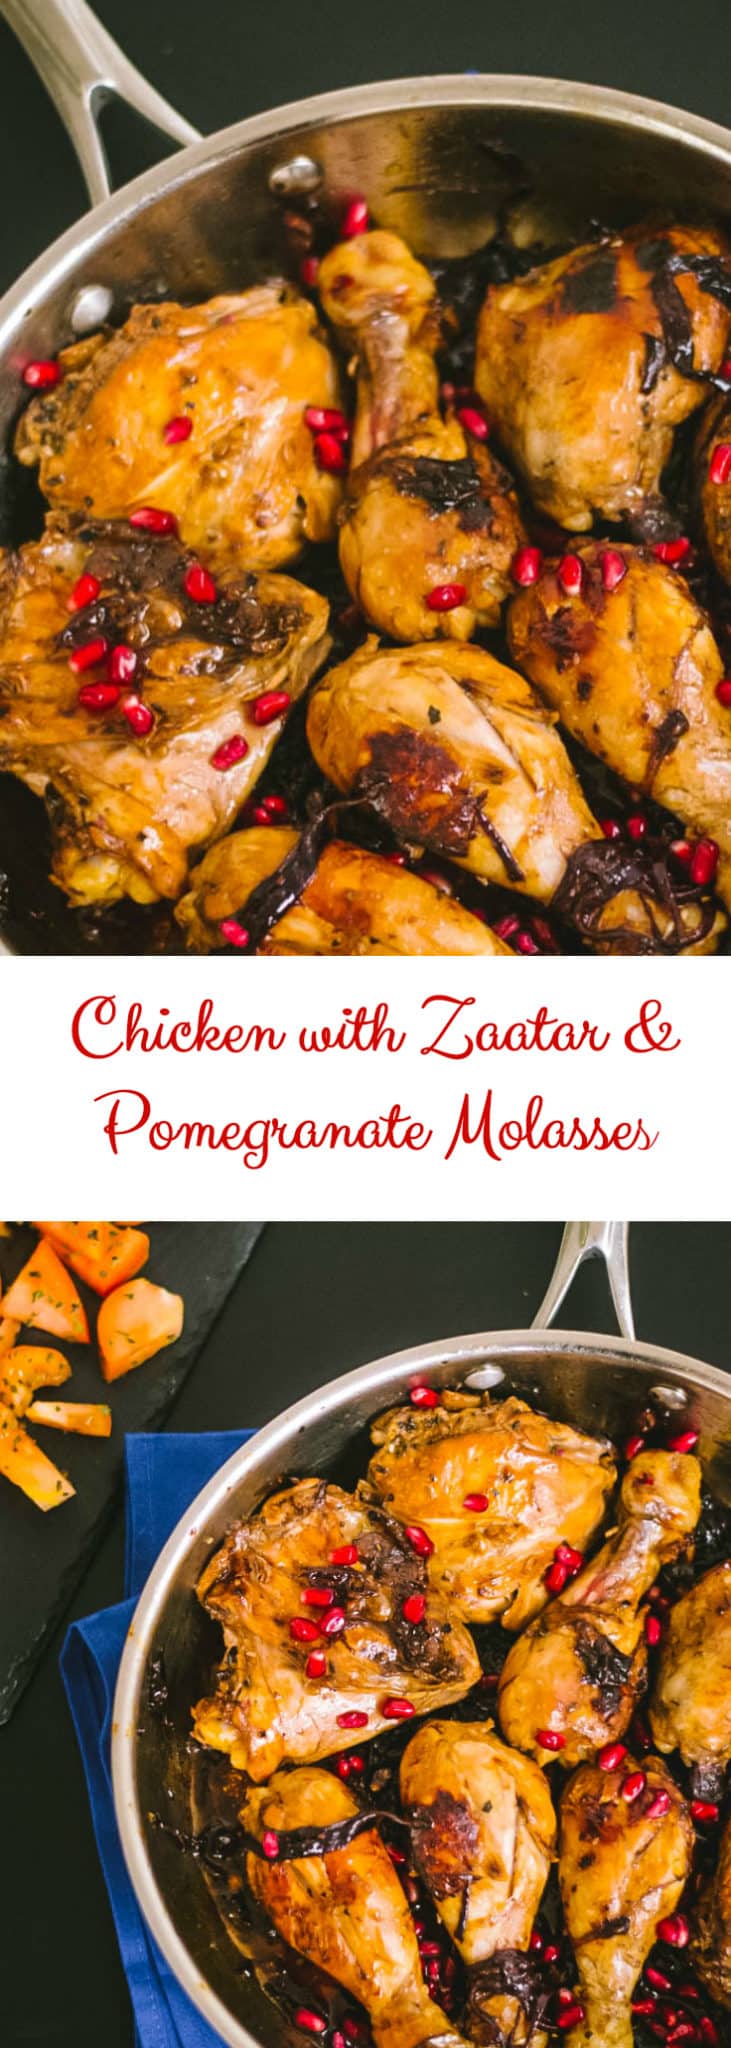 chicken-with-zaatar-pomegranate-molasses